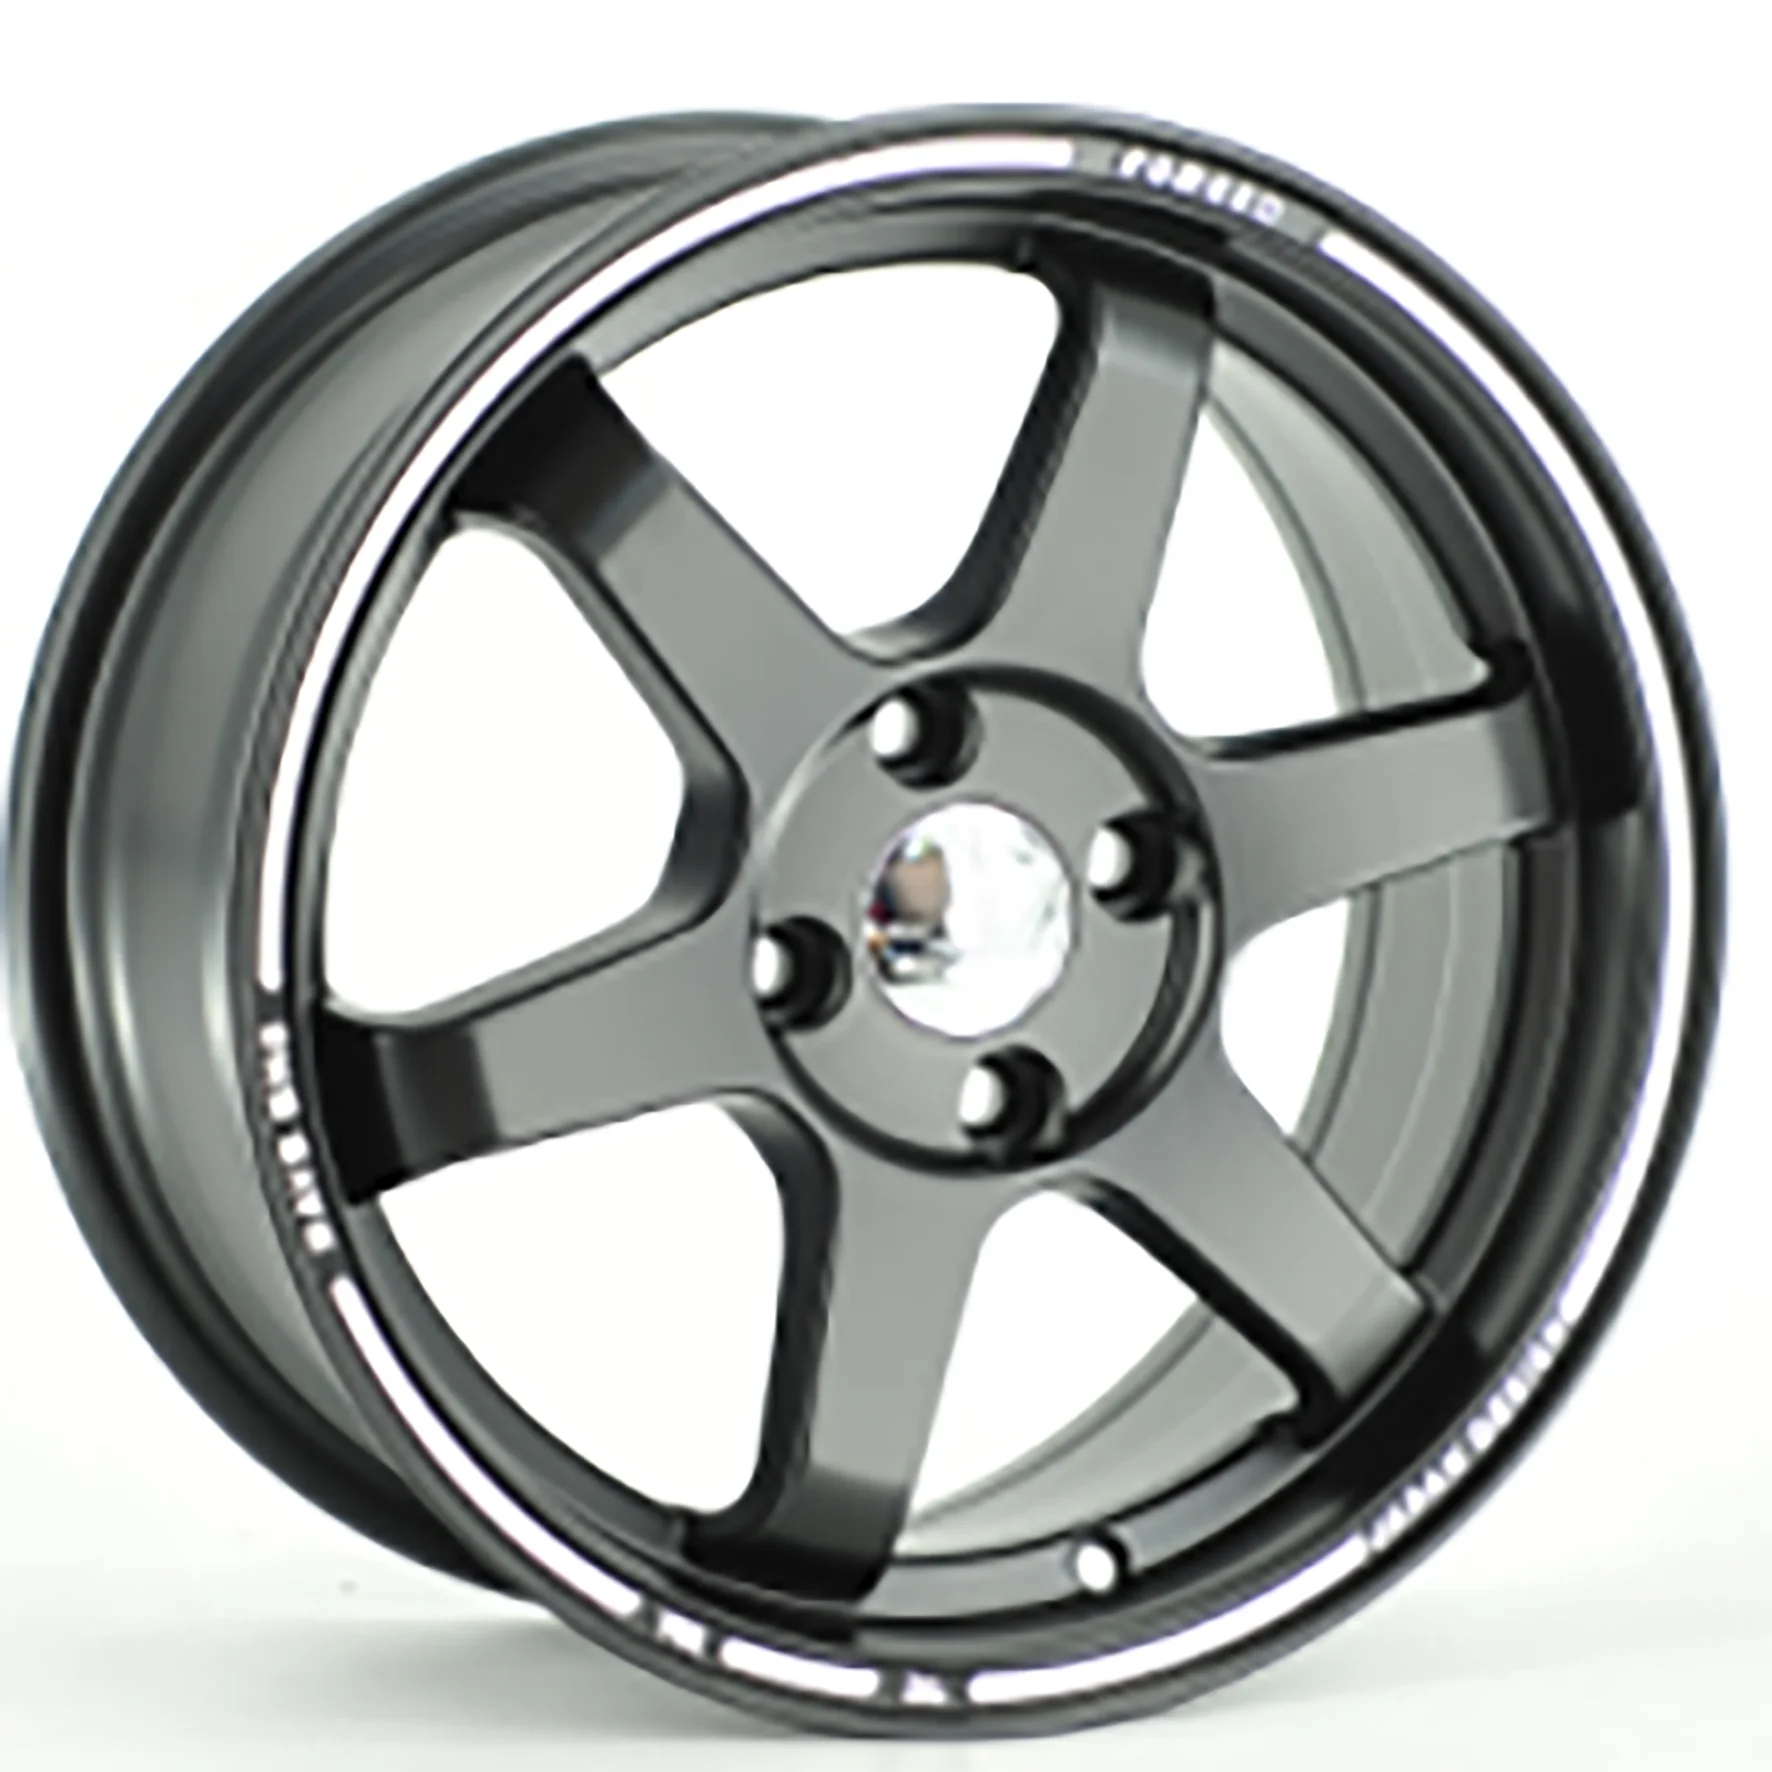 

YQ Hot Sale 15 Inch alloy wheels 6.5J ET 40 PCD 4x100 Passenger Car Wheel Alloy Rims